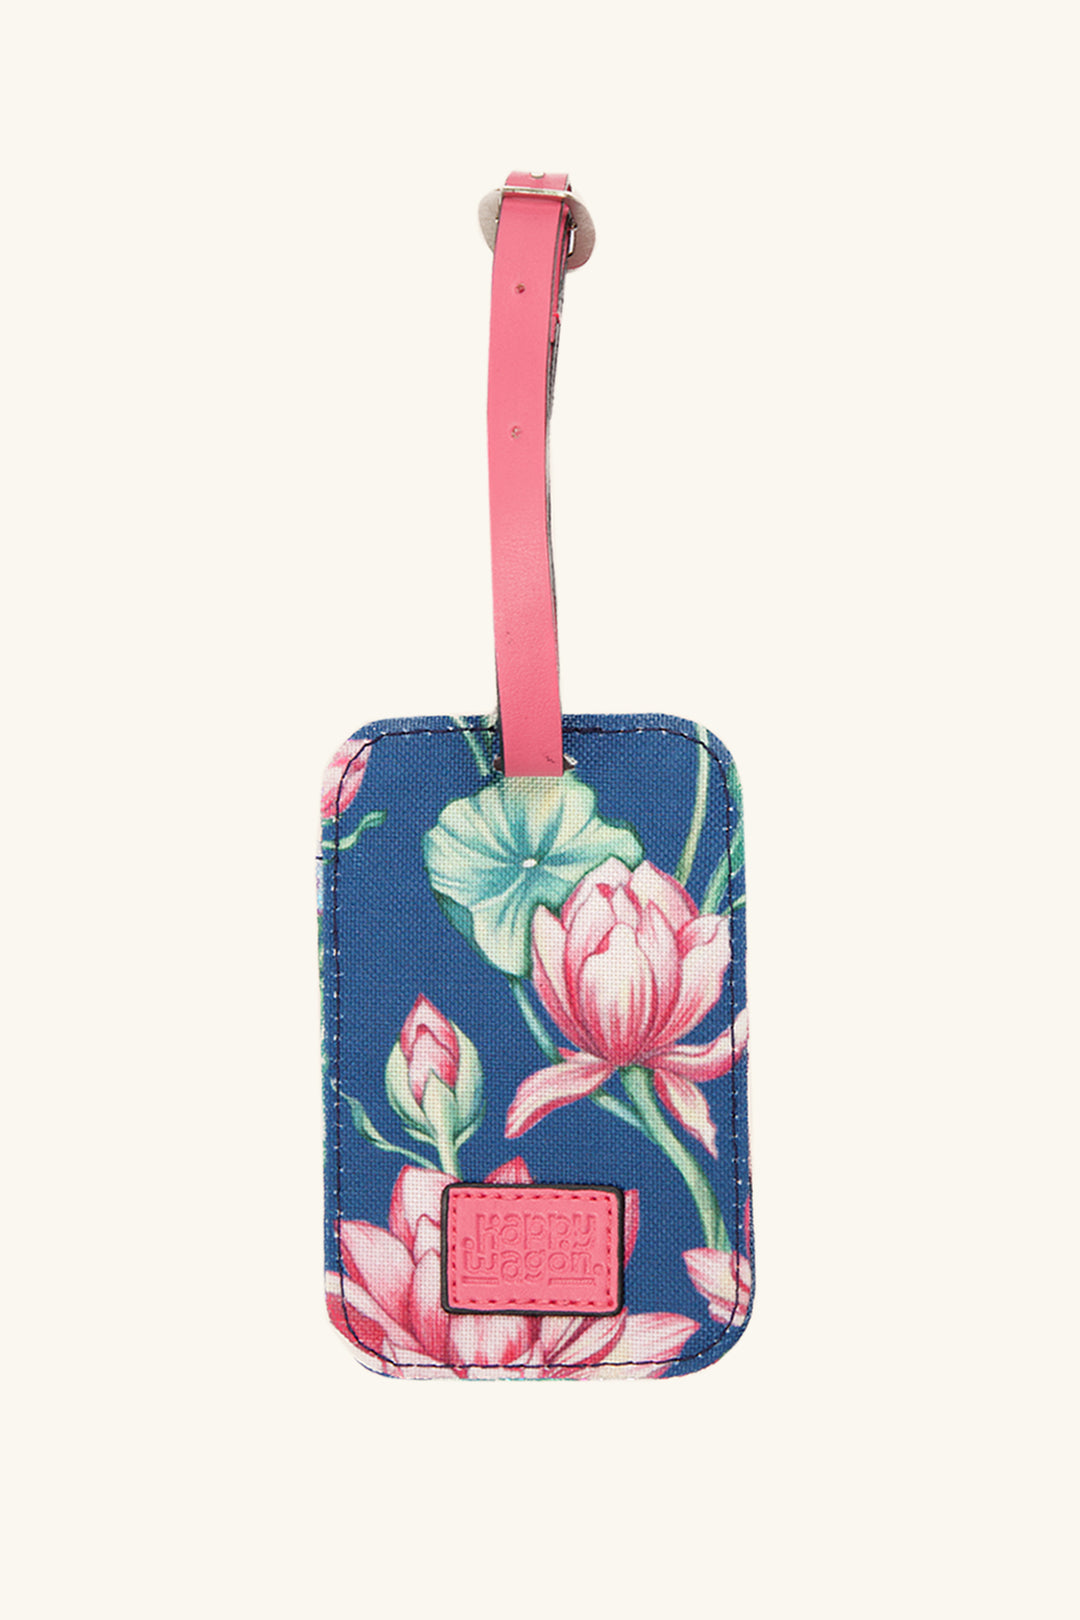 Lotus Bloom | Luggage Tag